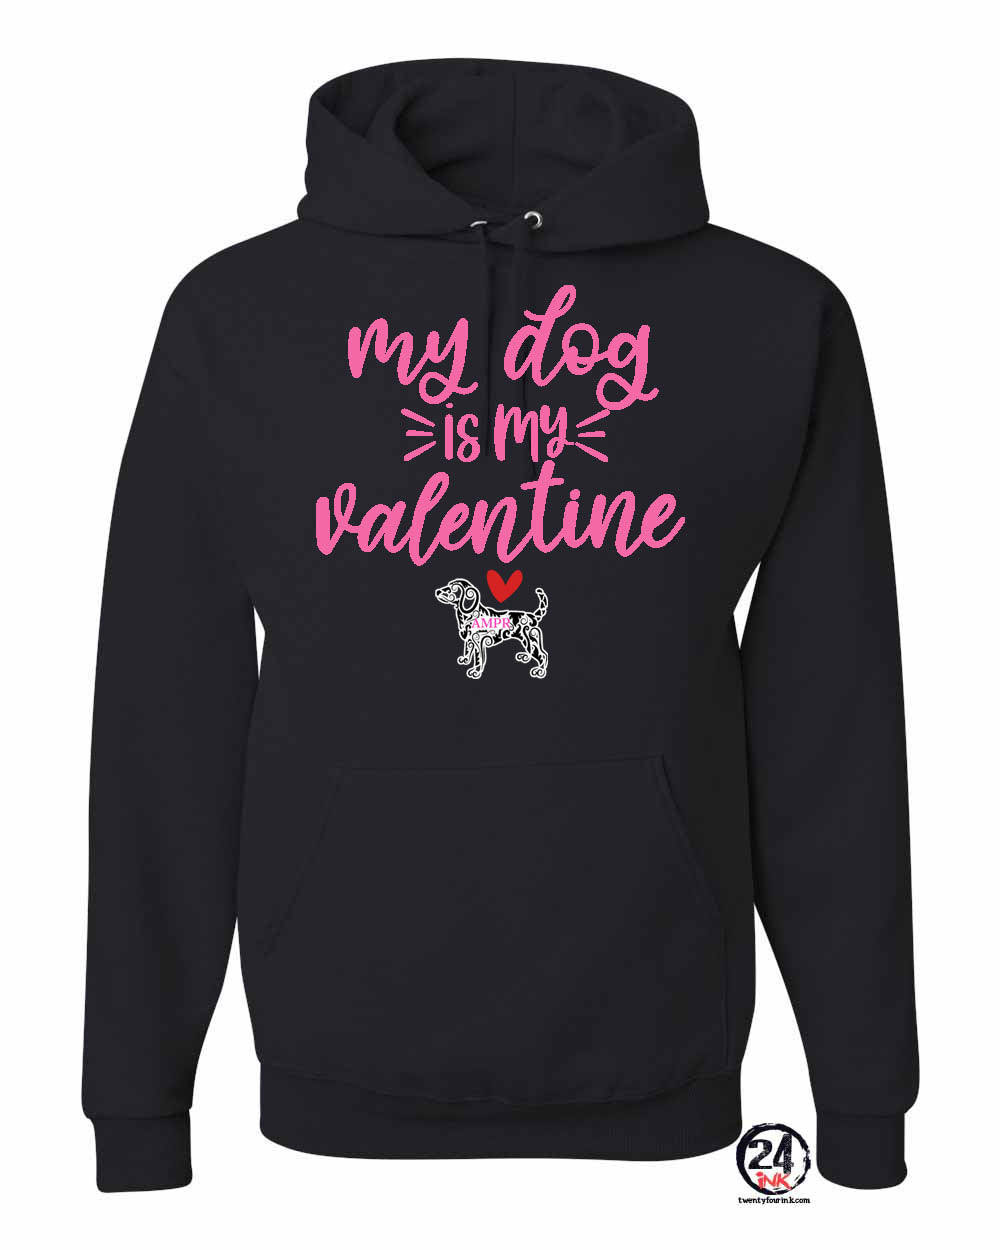 My dog is my Valentine Hooded Sweatshirt